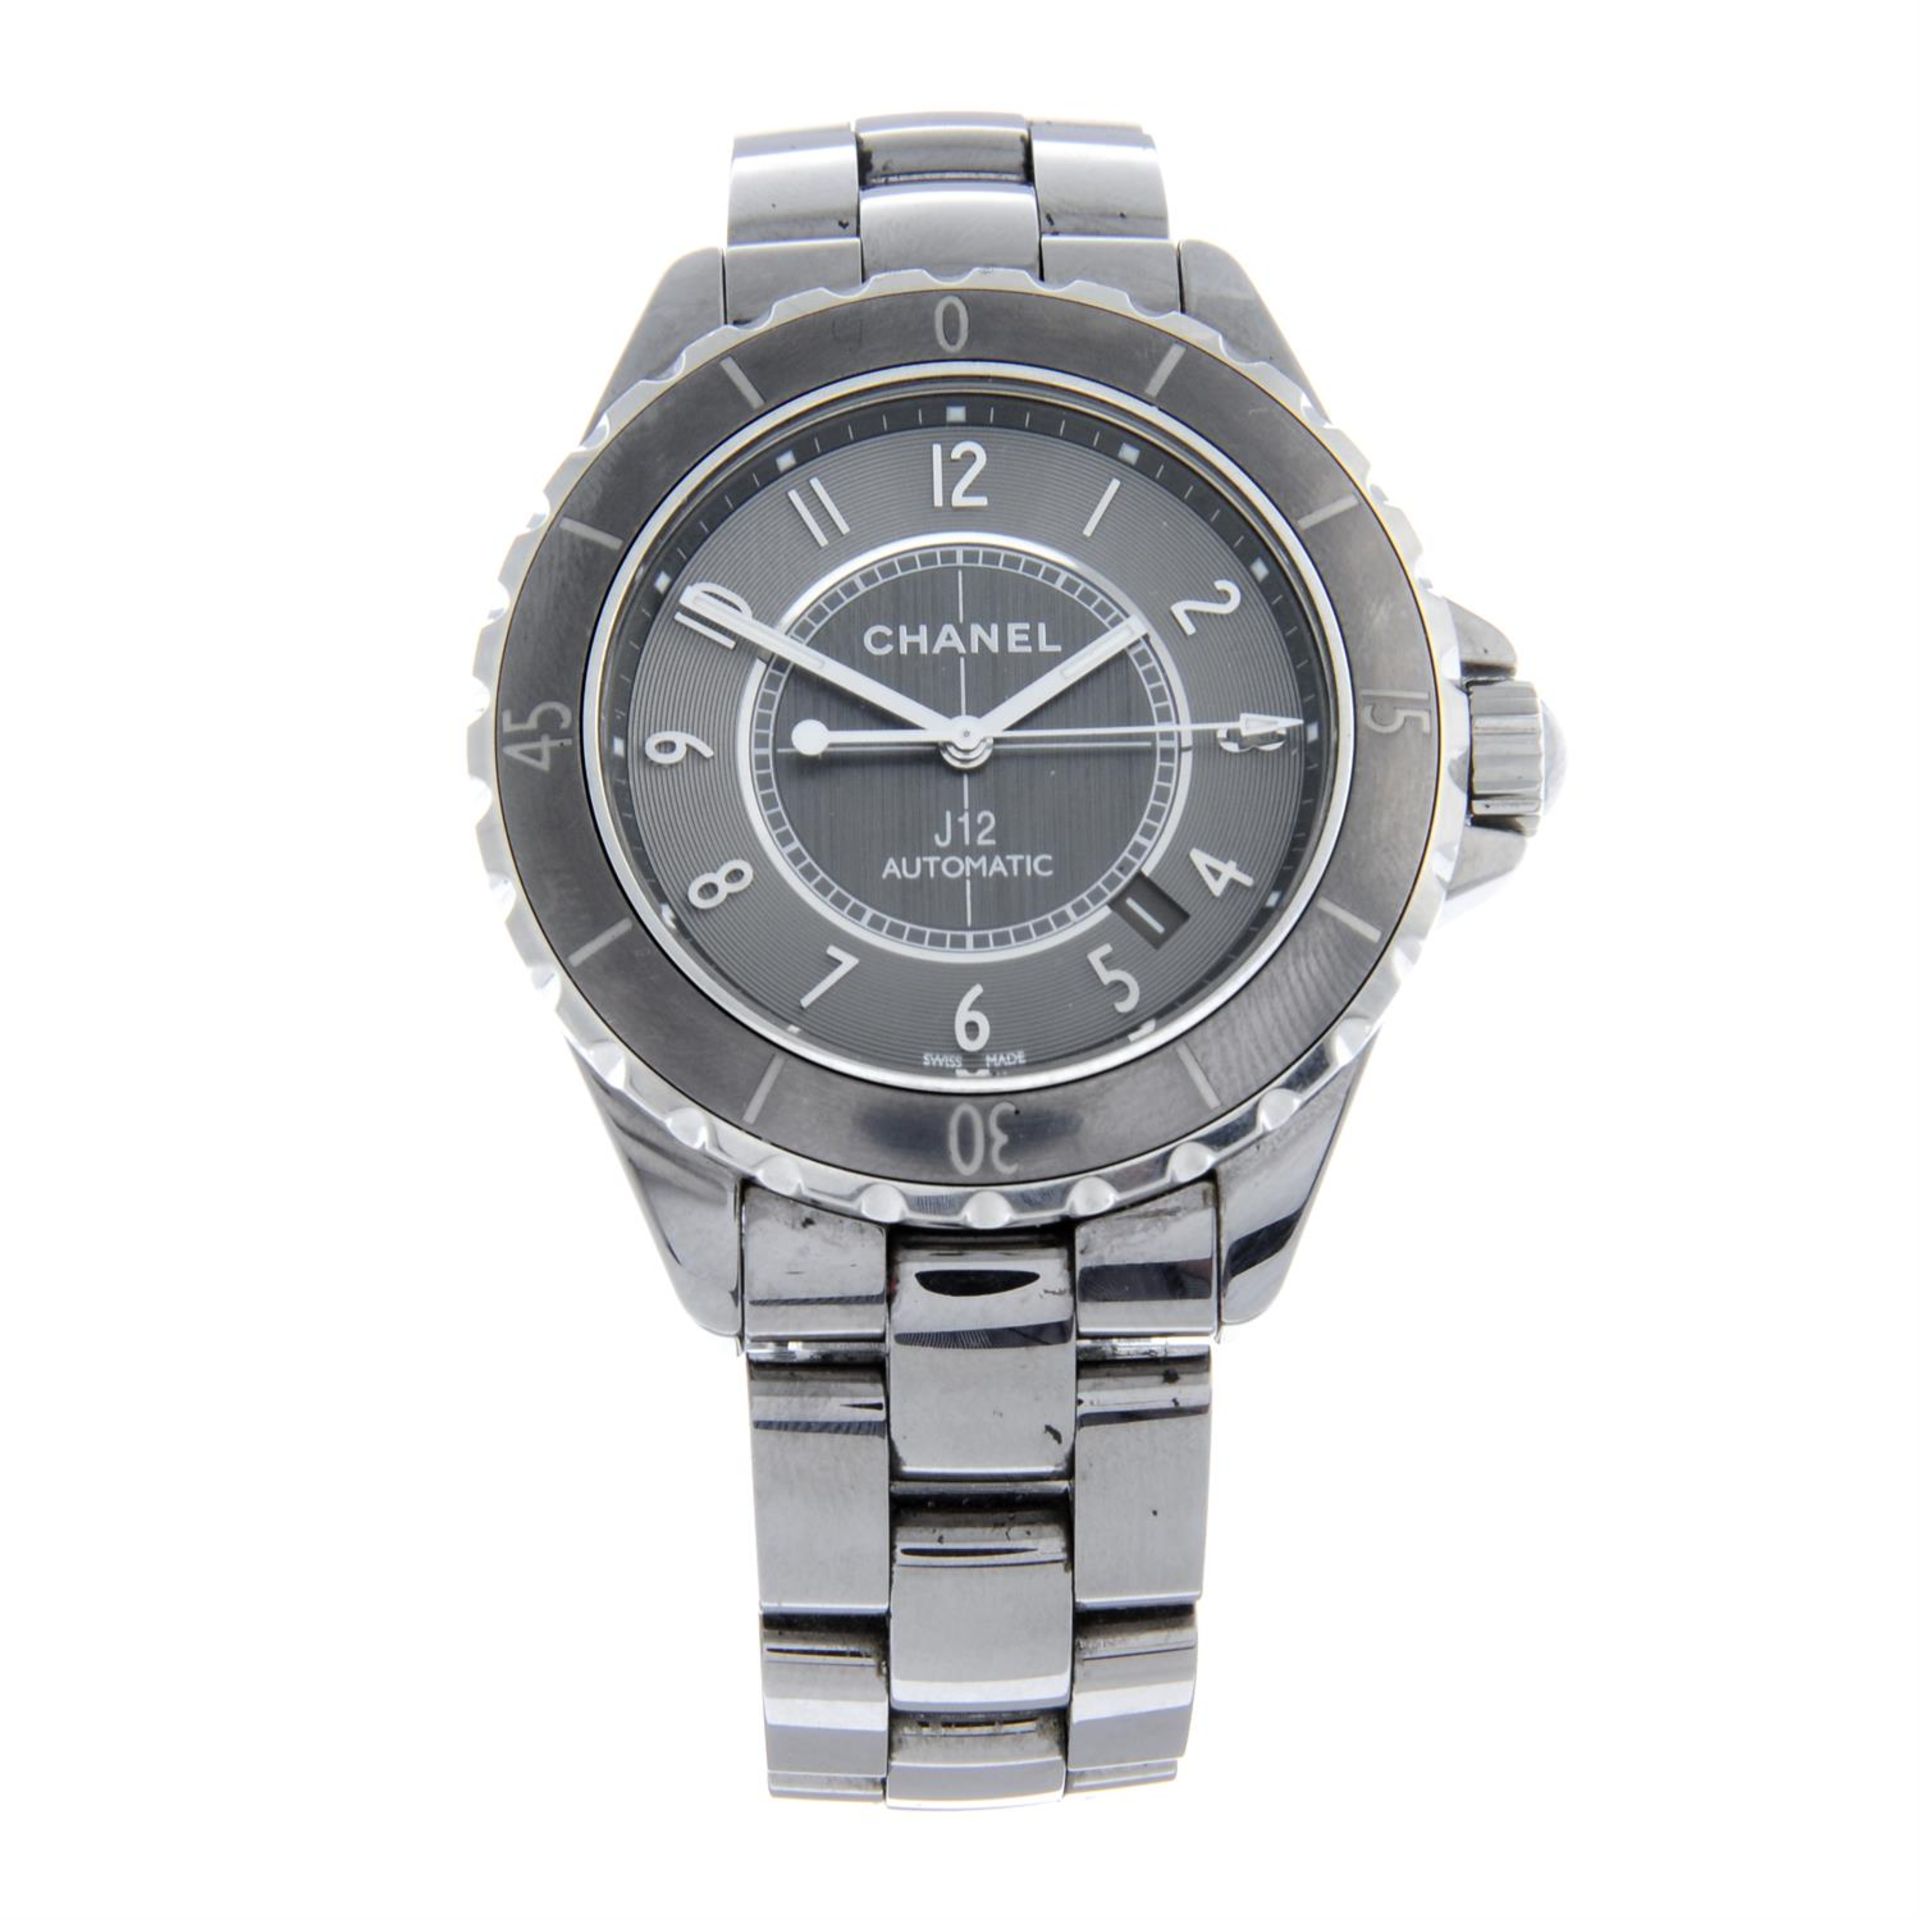 Chanel - a J12 Chromatic bracelet watch, 40mm.